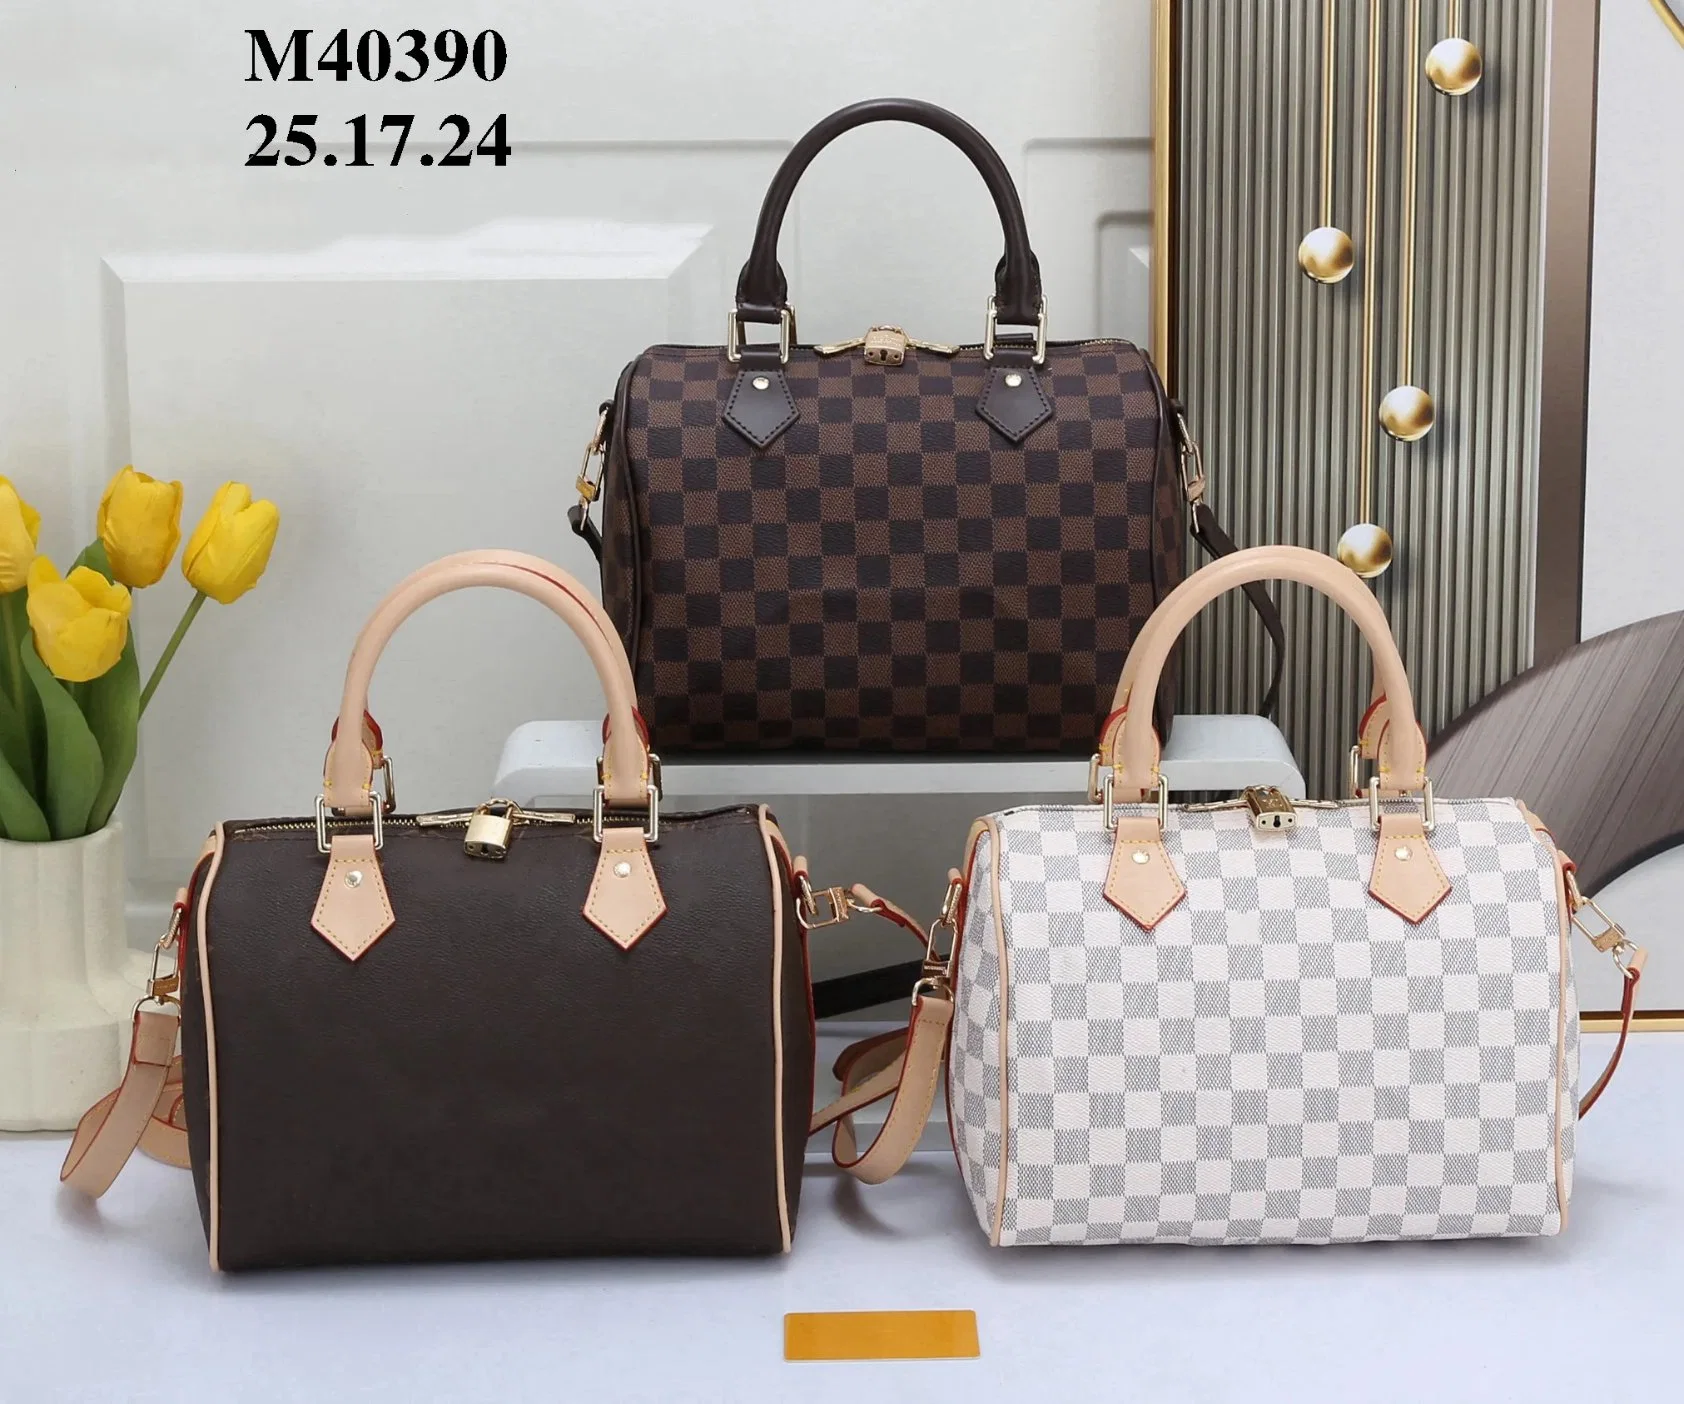 M40390 Speedy Handbags Women Messenger Bag Classic Luxury Designer Crossbody Bags Lady Totes with Key Lock Shoulder Strap Dust Bags Purse 25cm